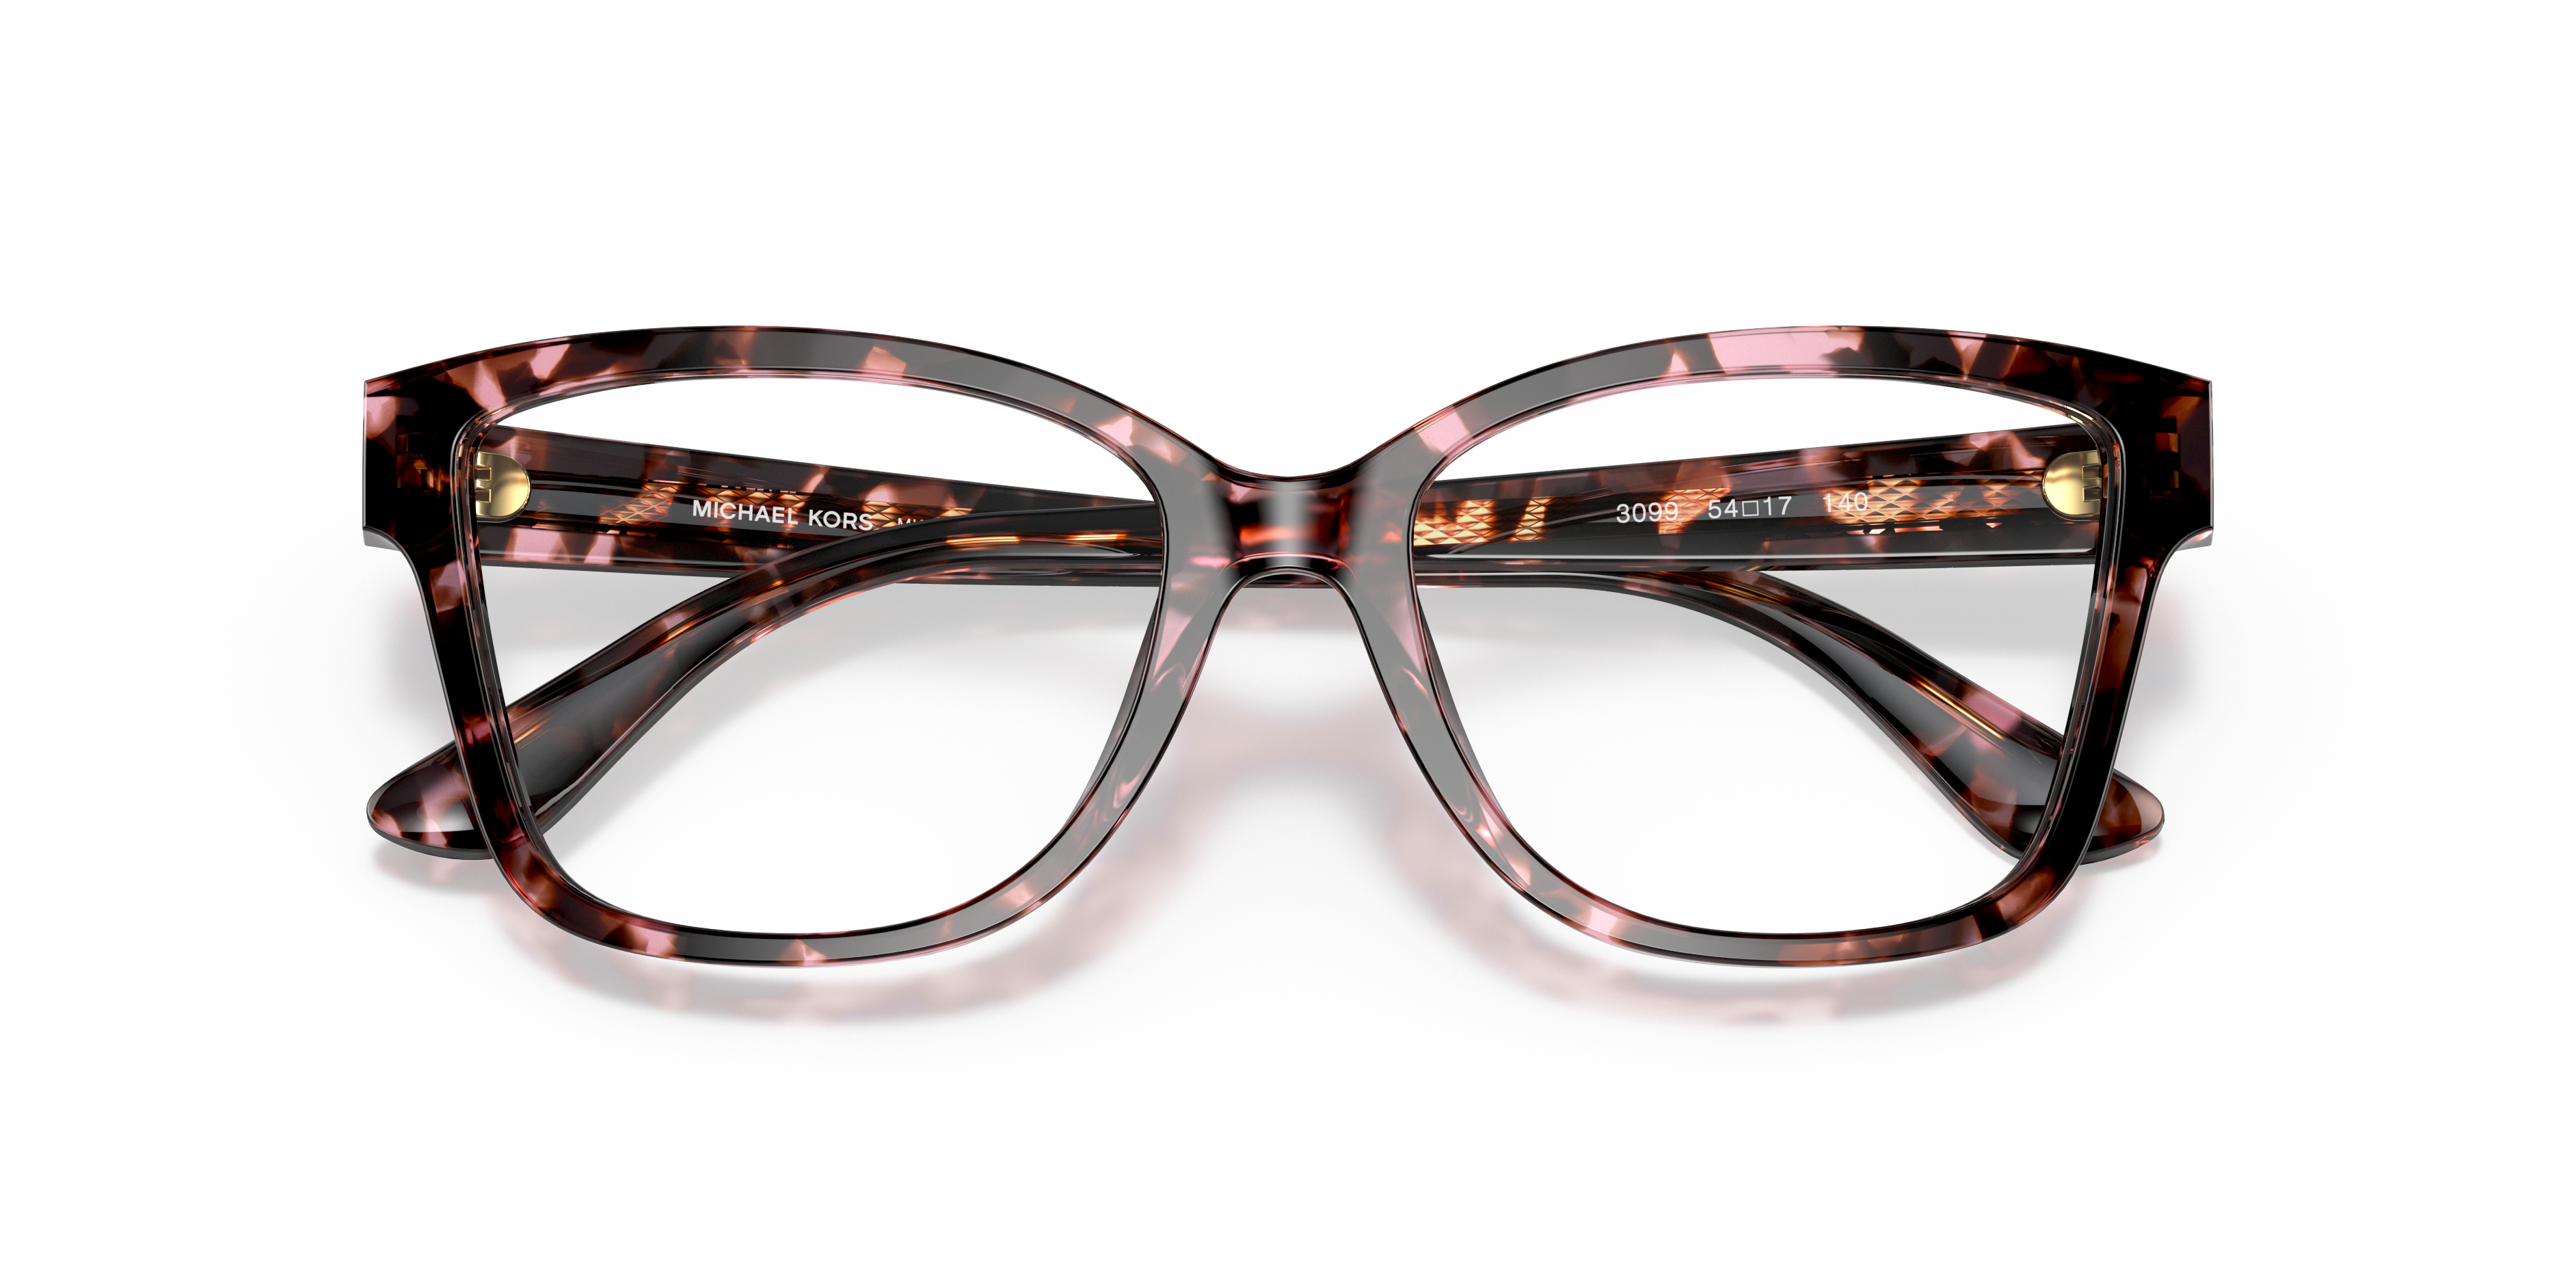 Michael Kors Prescription Glasses  Buy Prescription Glasses Online